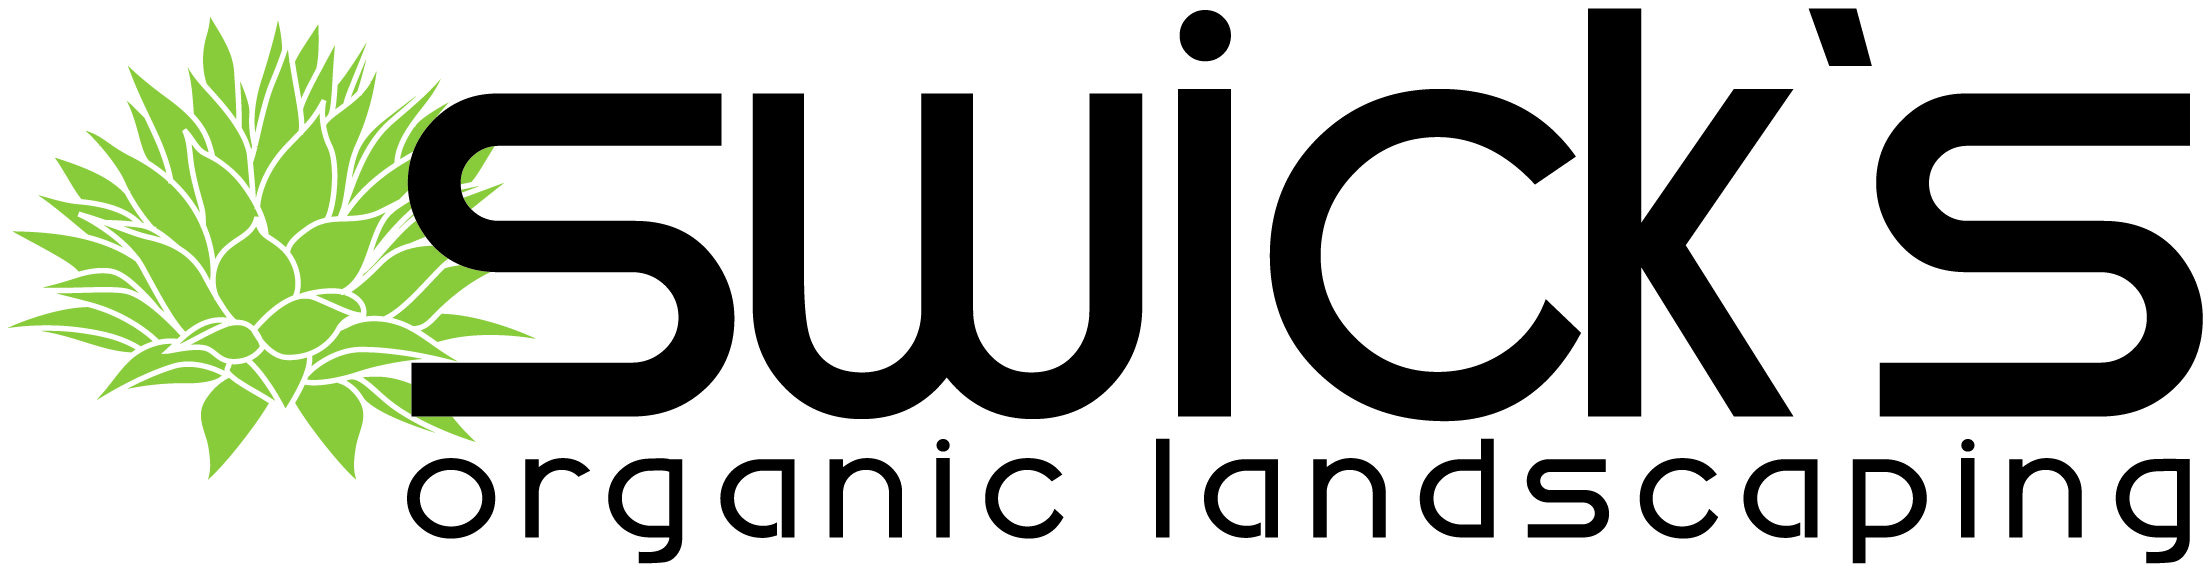 Swicks logo.jpg